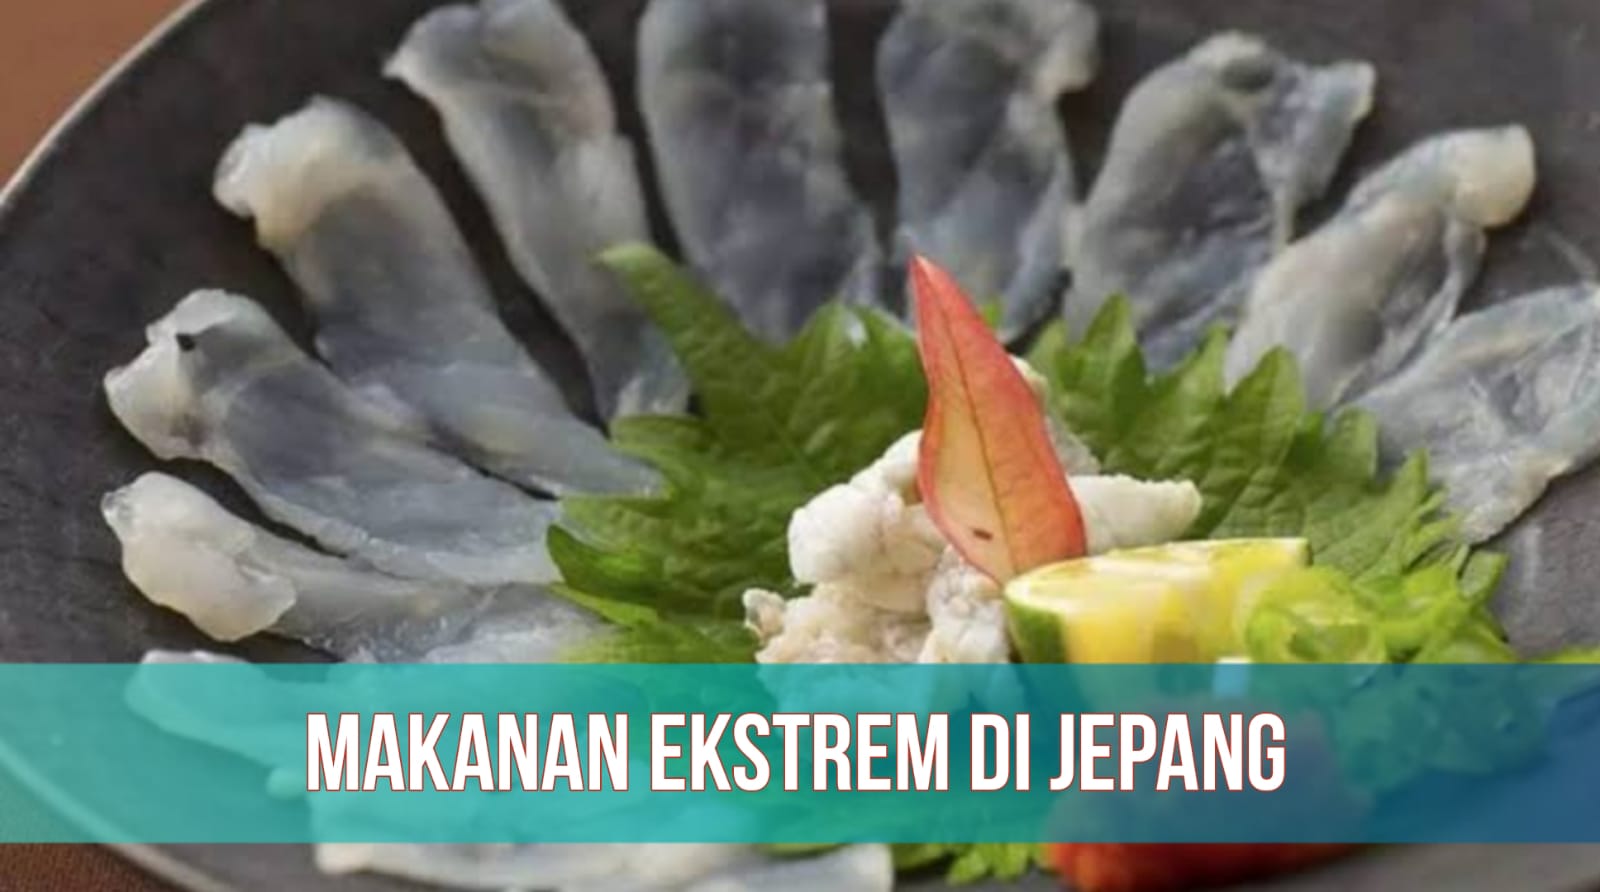 Makanan Esktrem di Jepang, Ikan Beracun Disulap Jadi Hidangan Mewah, Berani Cicip?